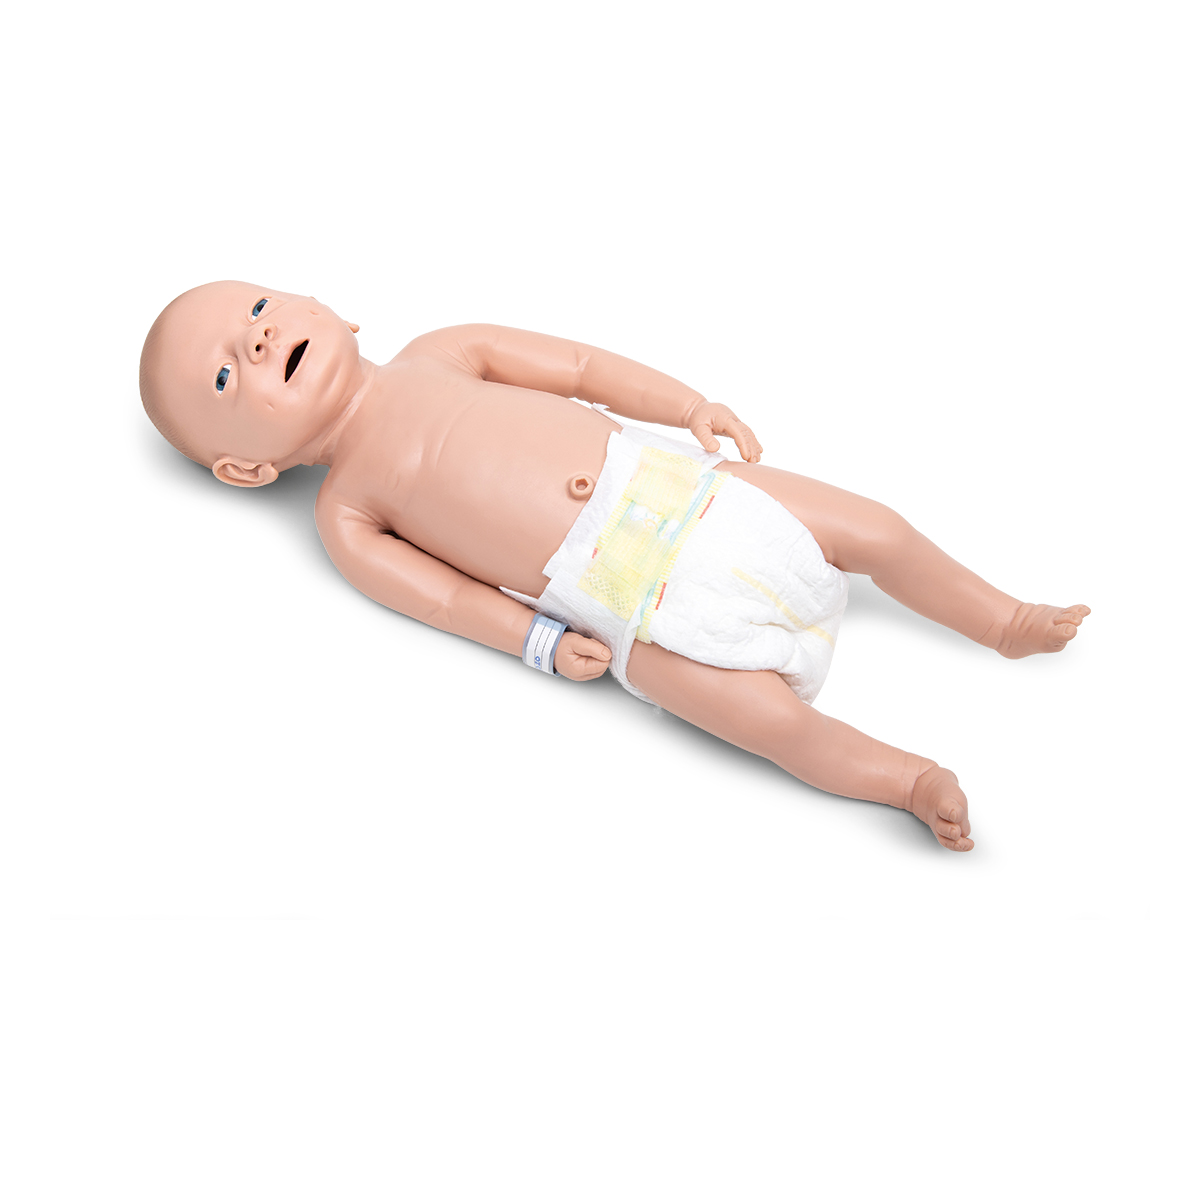 Säuglingspflegebaby, männlich, Bestellnummer 1000506, P31, 3B Scientific